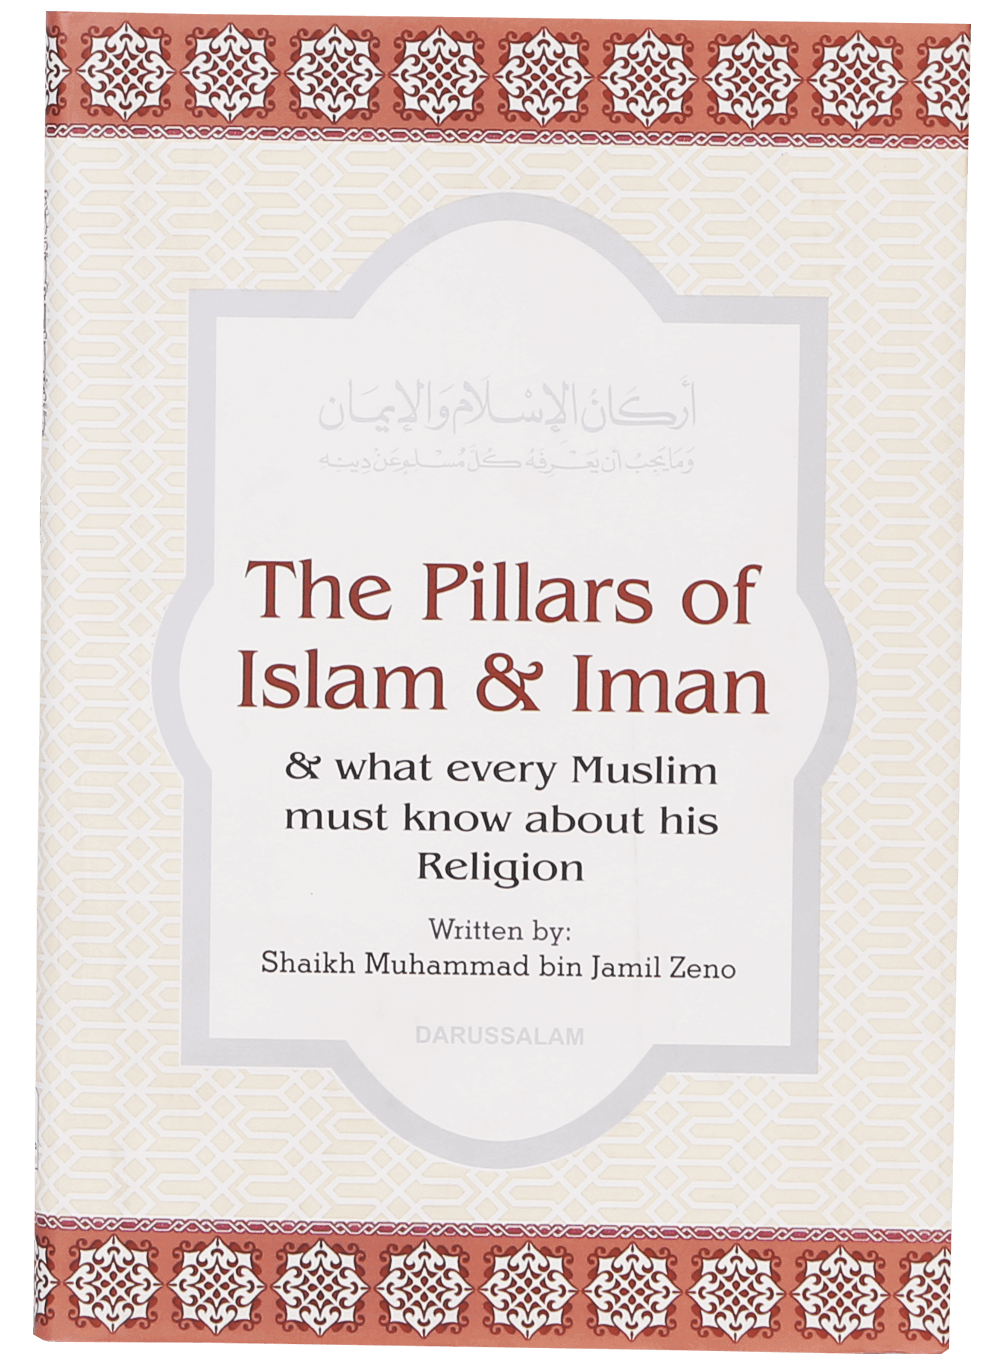 darussalam-2017-11-01-15-53-56the-pillars-of-islam-and-iman-1